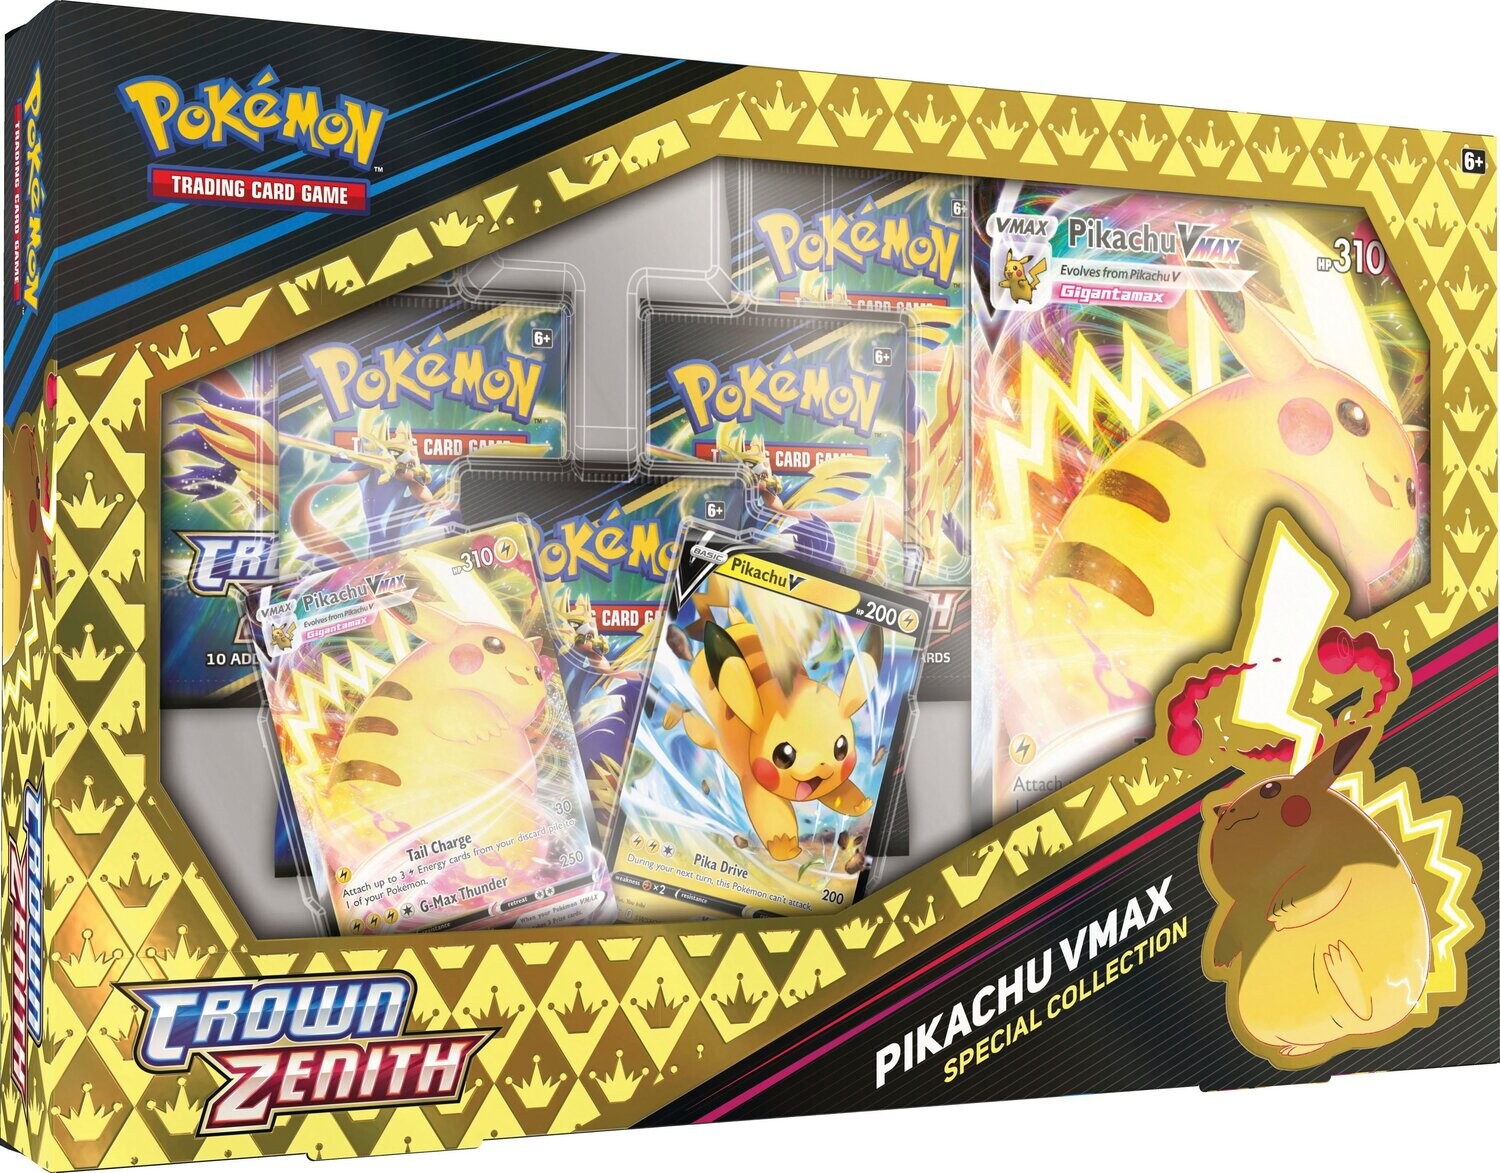 Pokemon Crown Zenith Special Colletion Pikachu Vmax